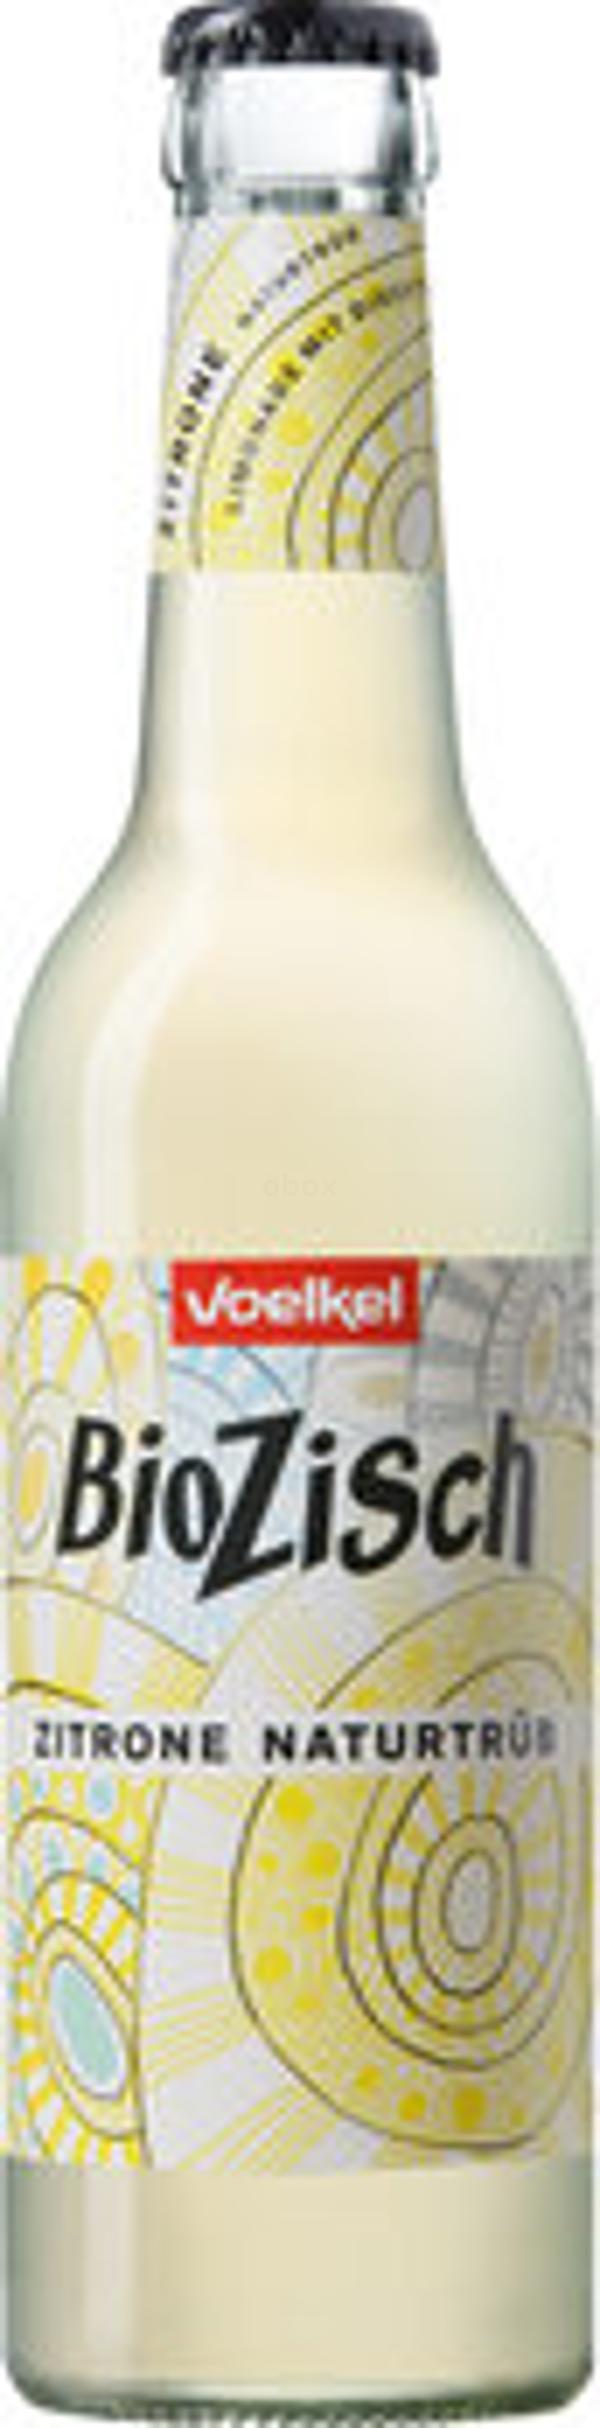 Produktfoto zu BioZisch Zitrone Naturtrüb, 0,33 l